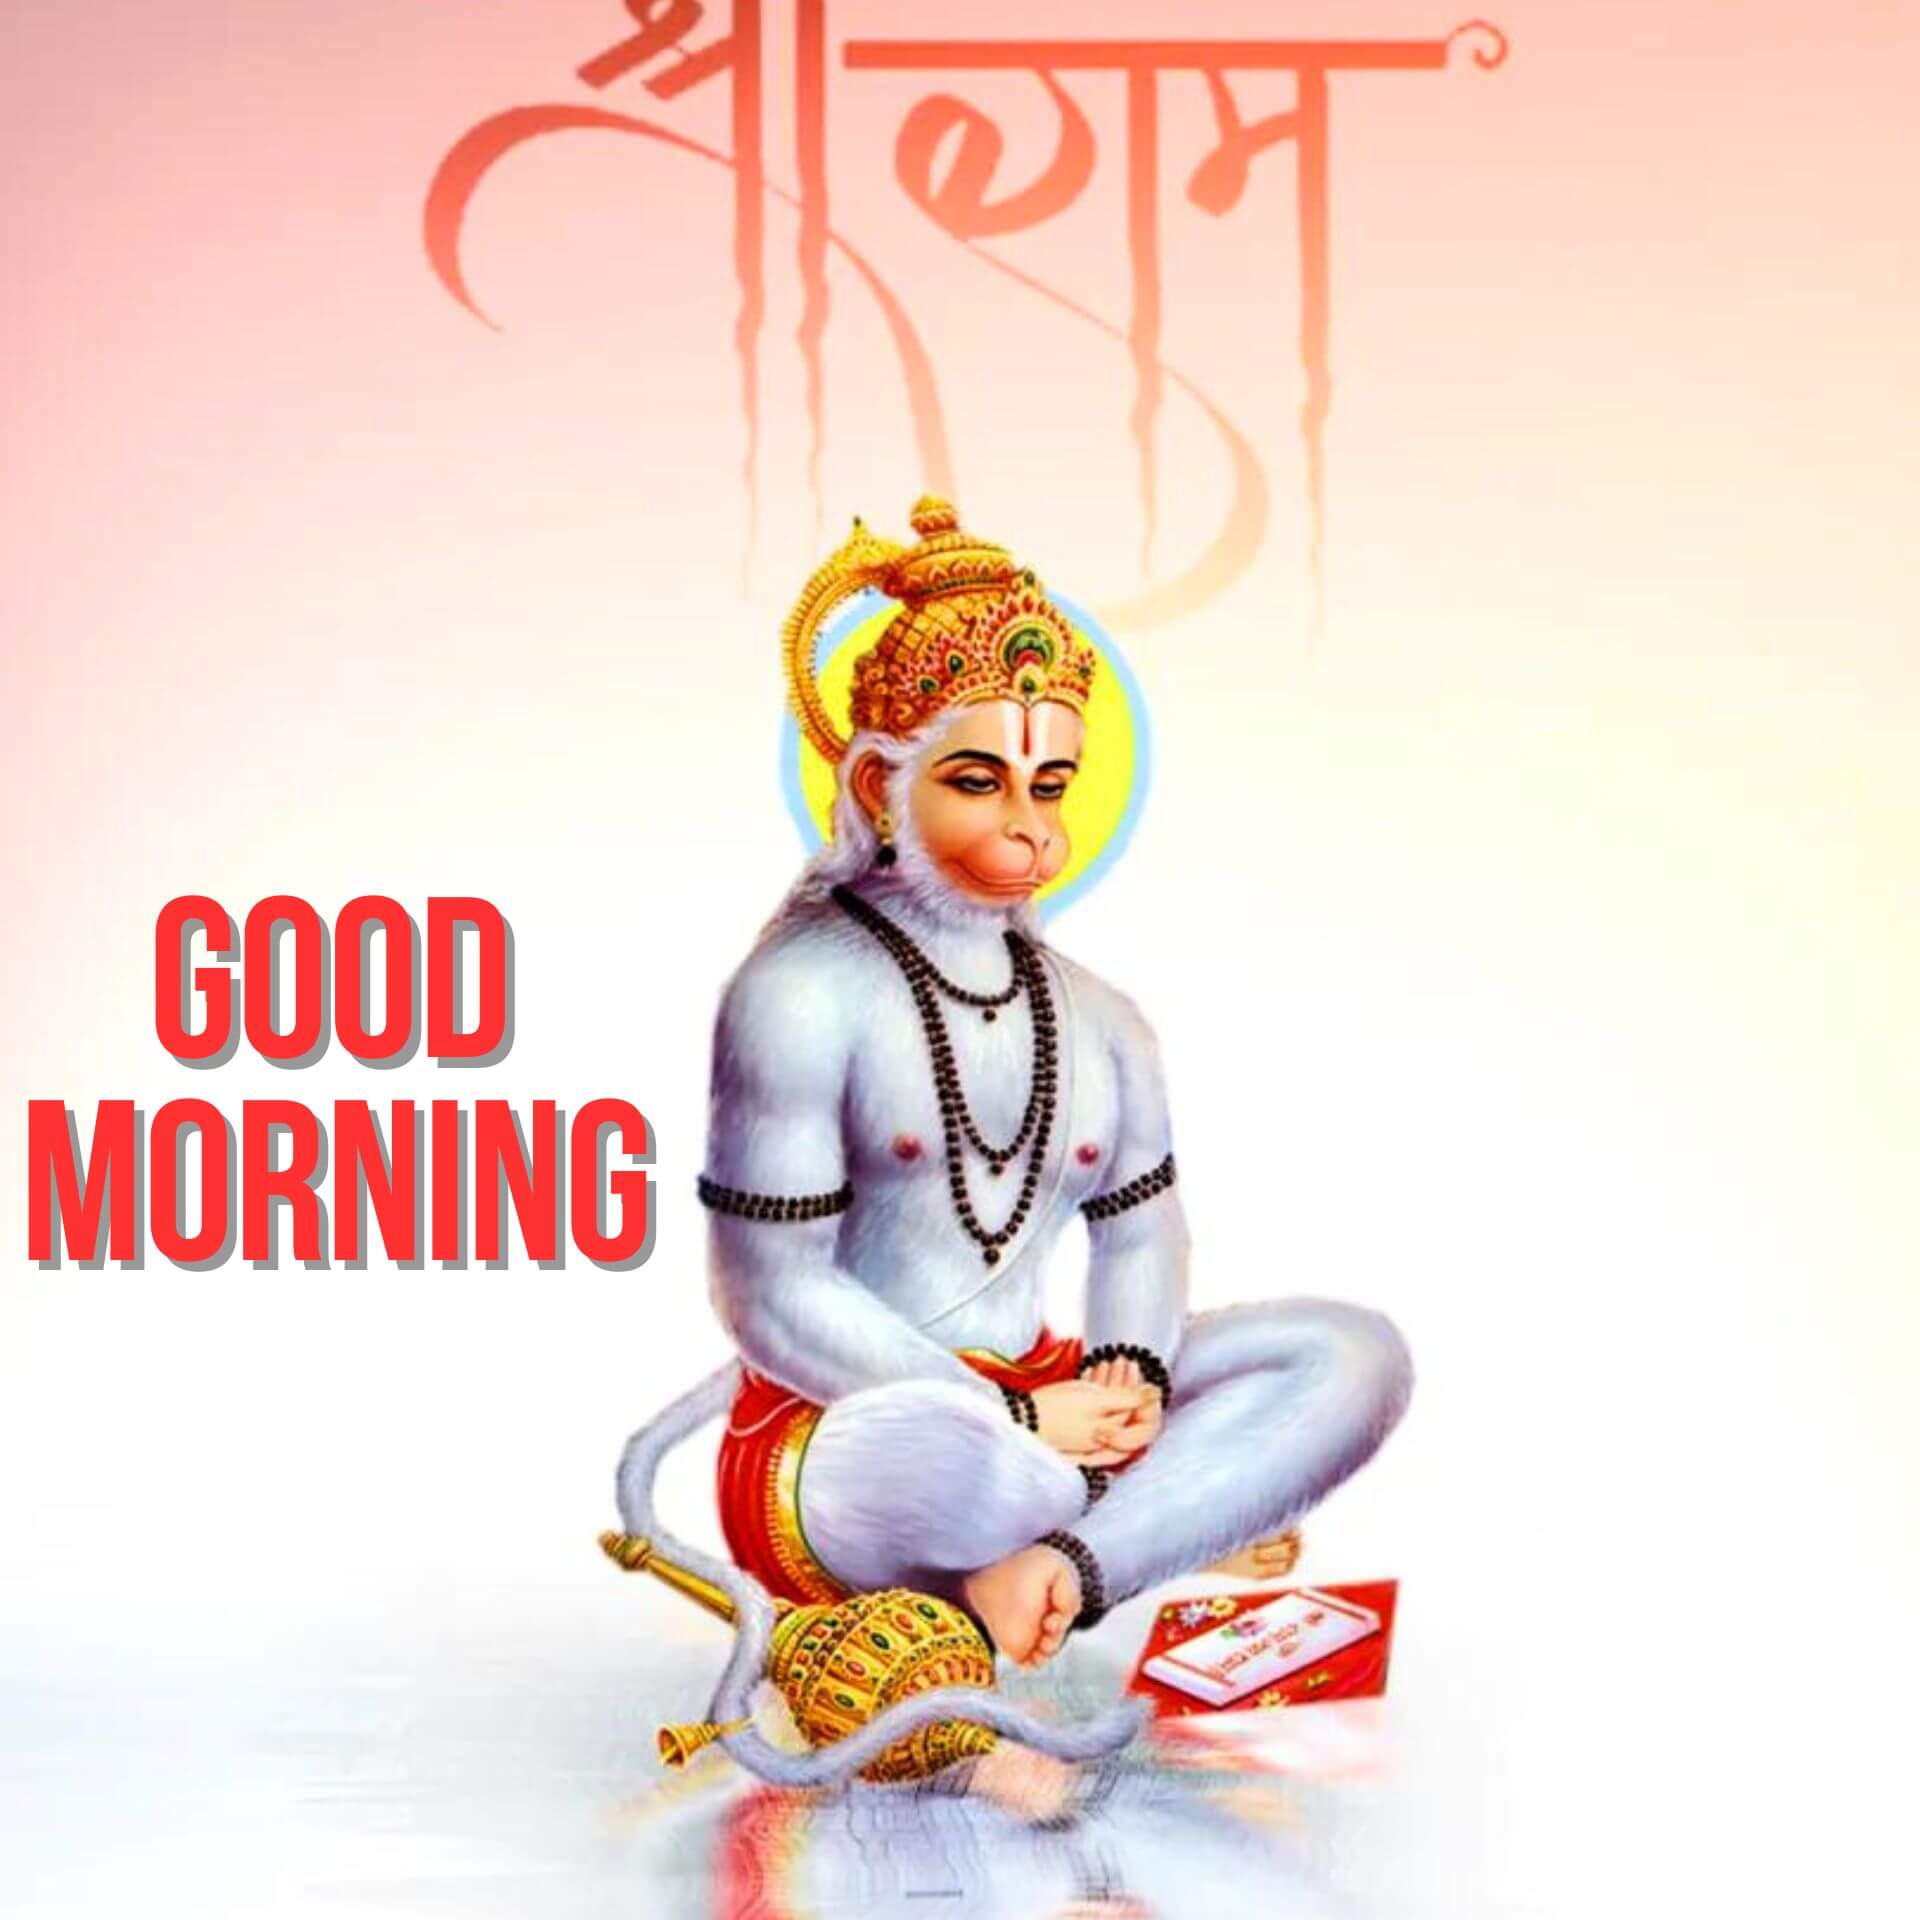 hanuman ji good morning Wallpaper Pics for Facebook